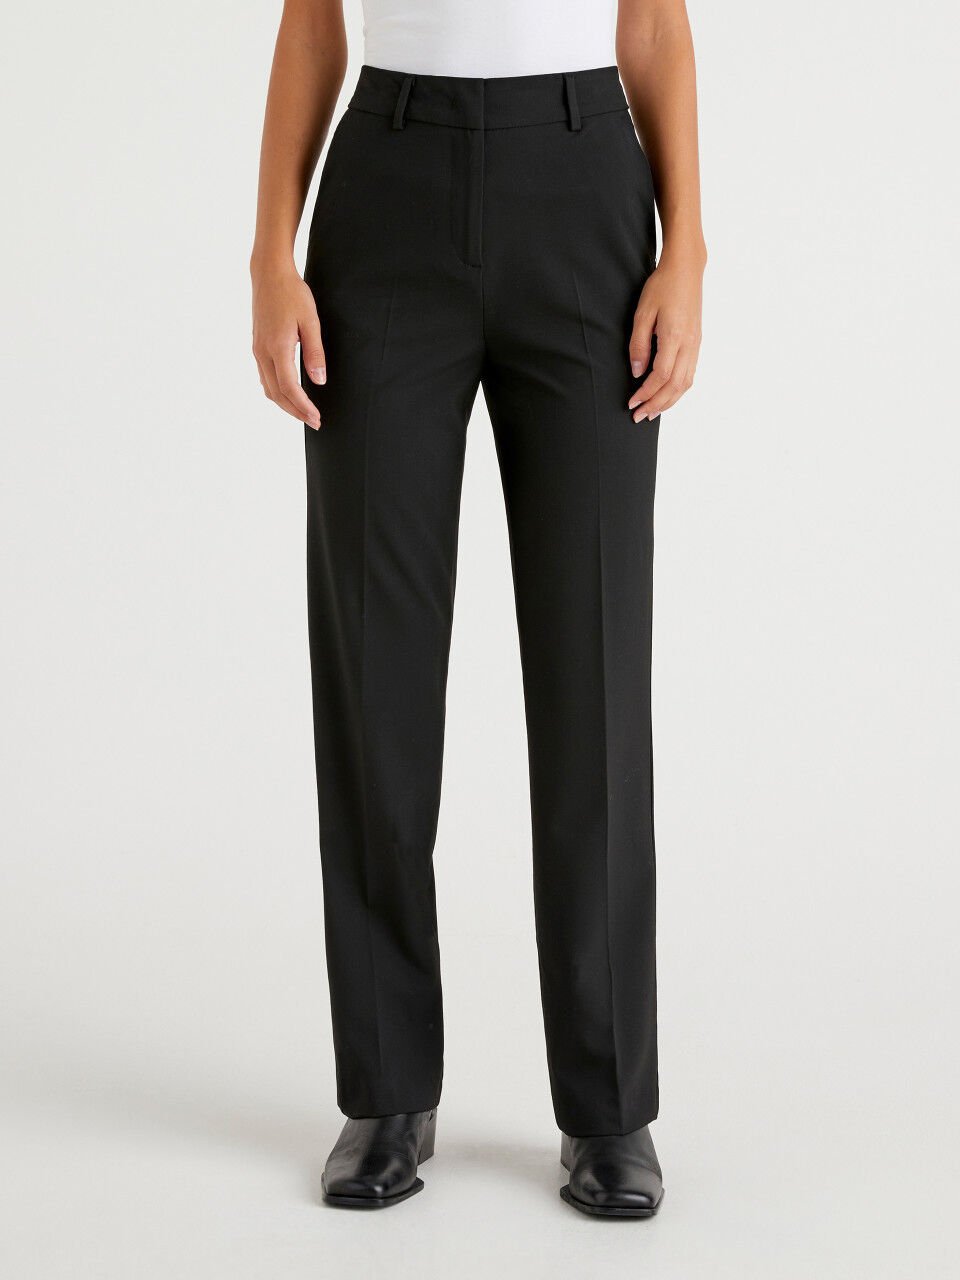 Full Length Formal Trouser - Selling Fast at Pantaloons.com